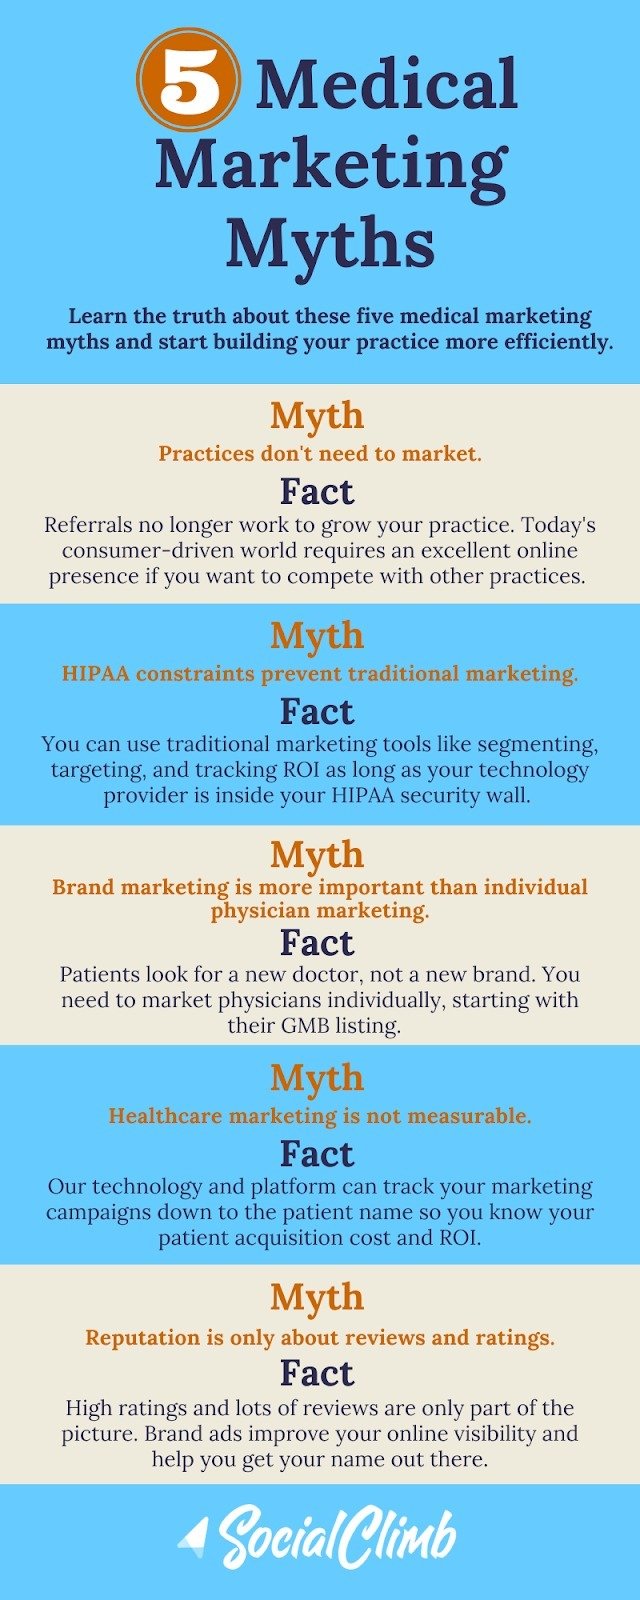 5 medical marketing myths infographic